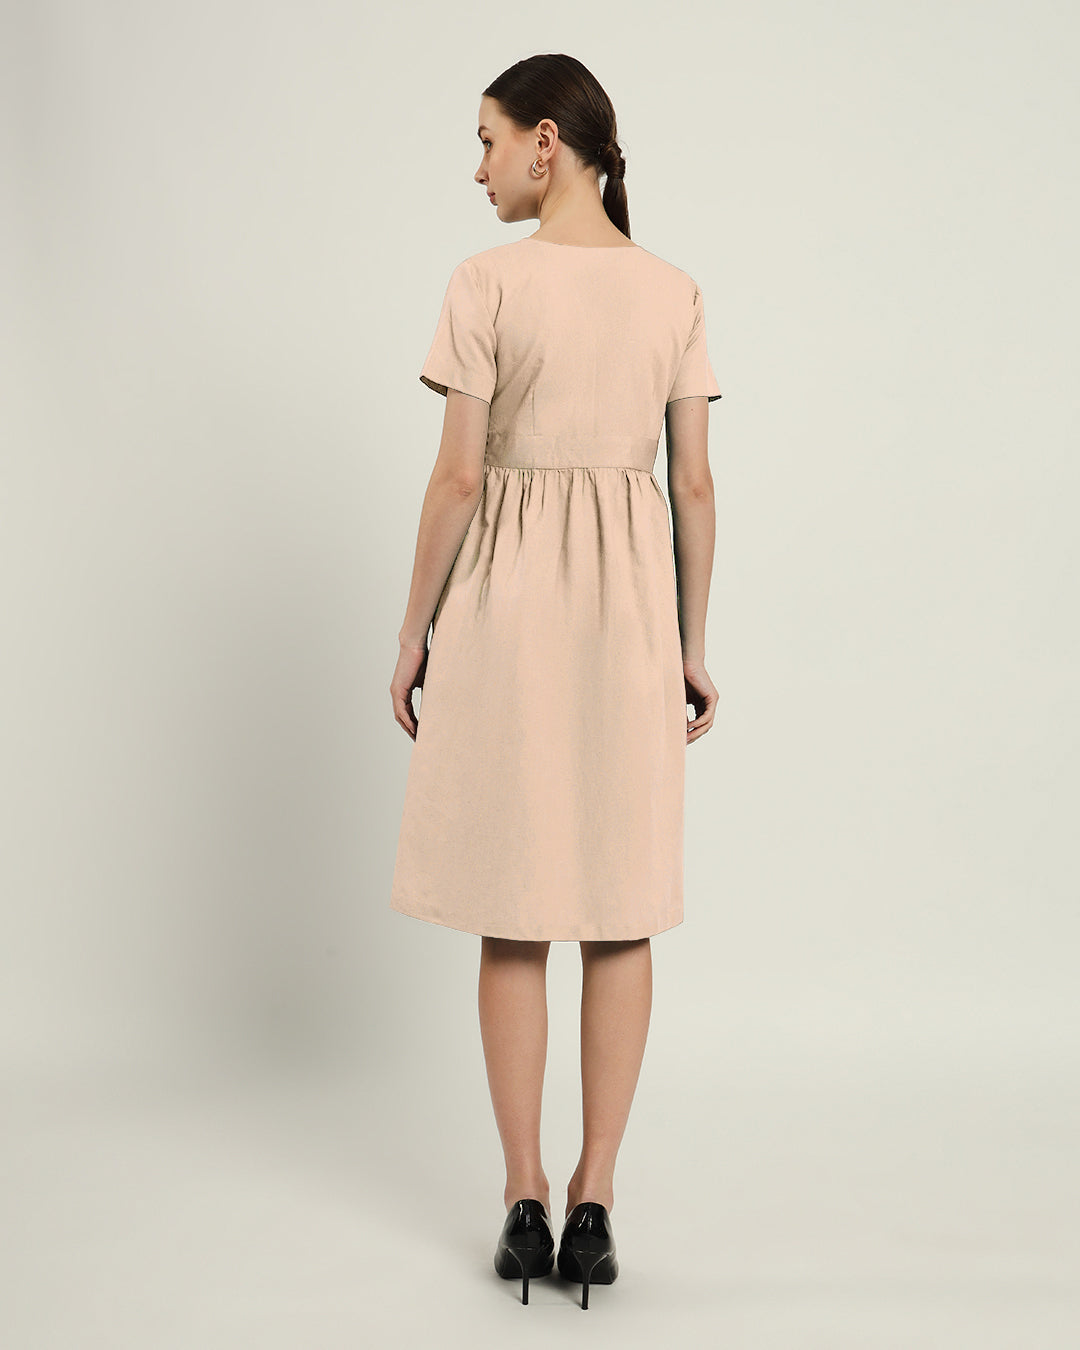 The Miyoshi Daisy Bisque Linen Dress